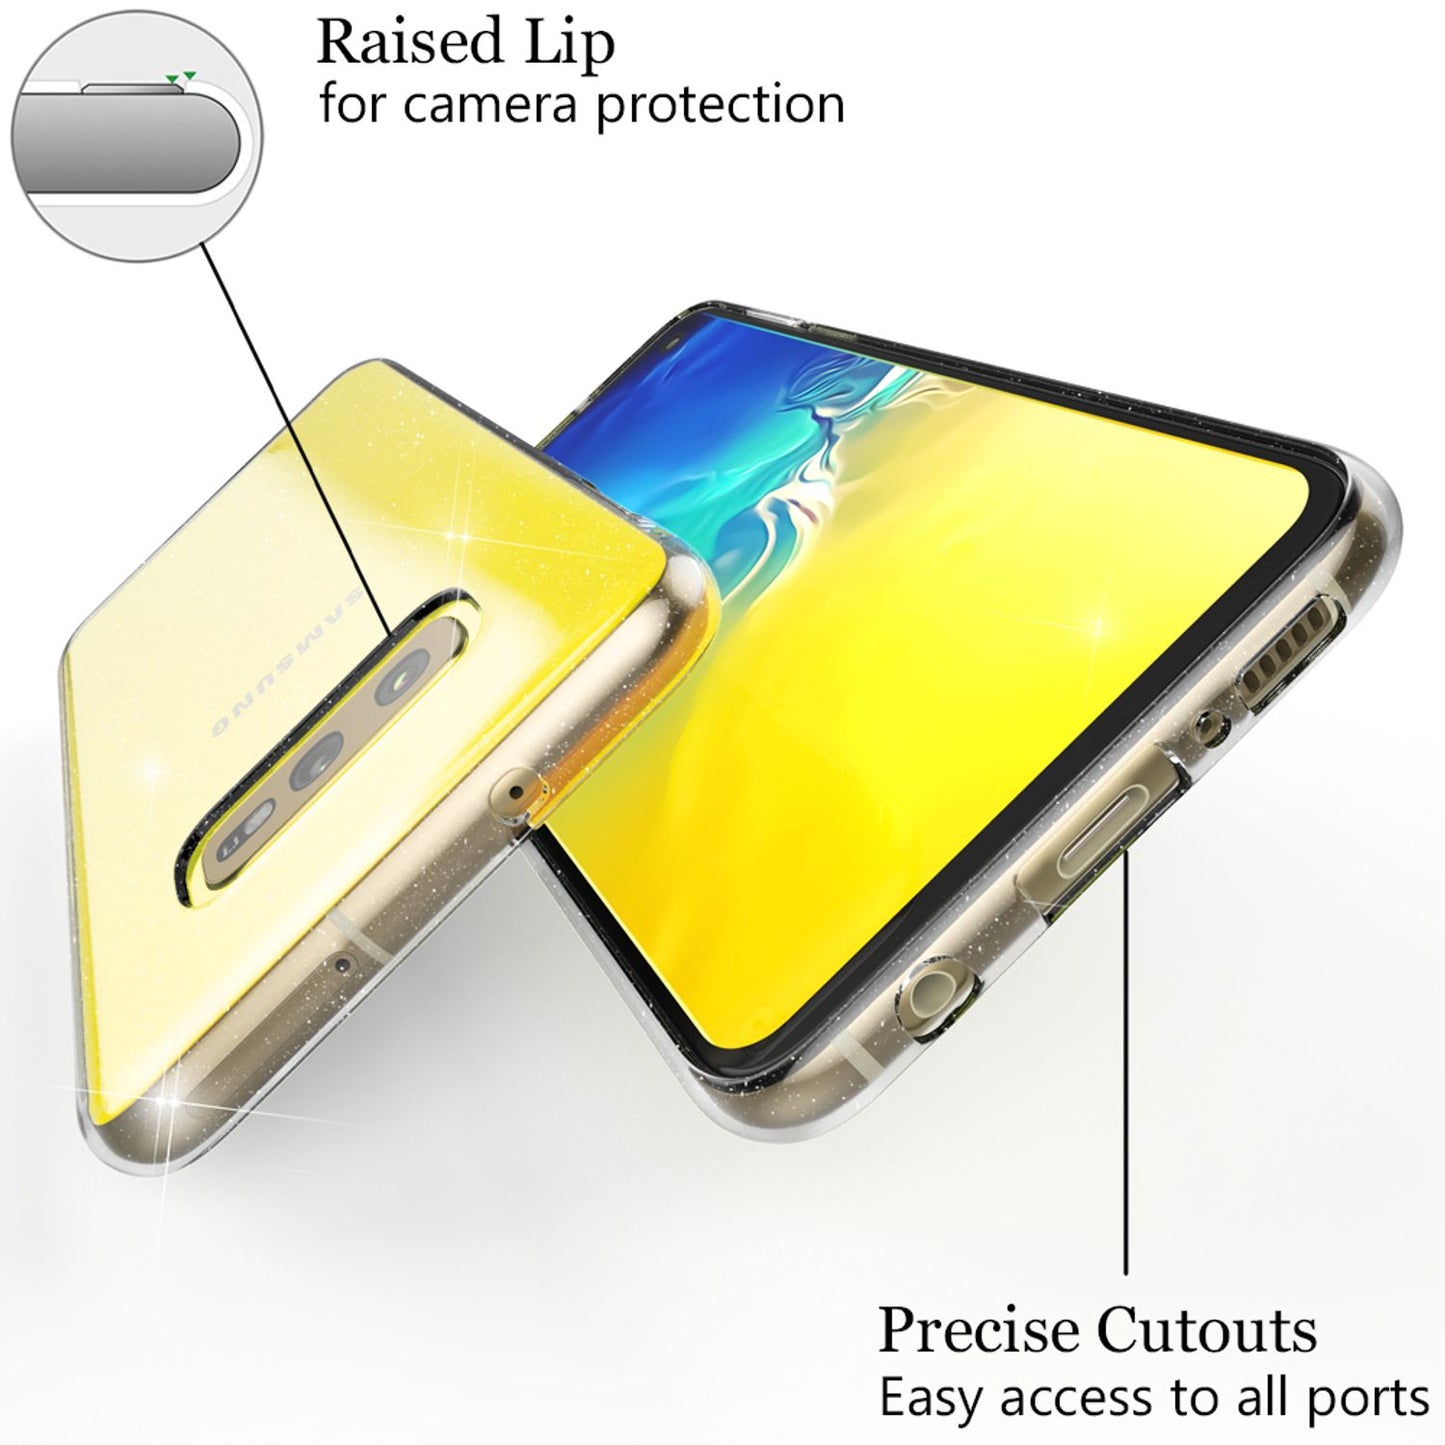 NALIA Glitter Hülle kompatibel mit Samsung Galaxy S10e, Glitzer Handyhülle Case